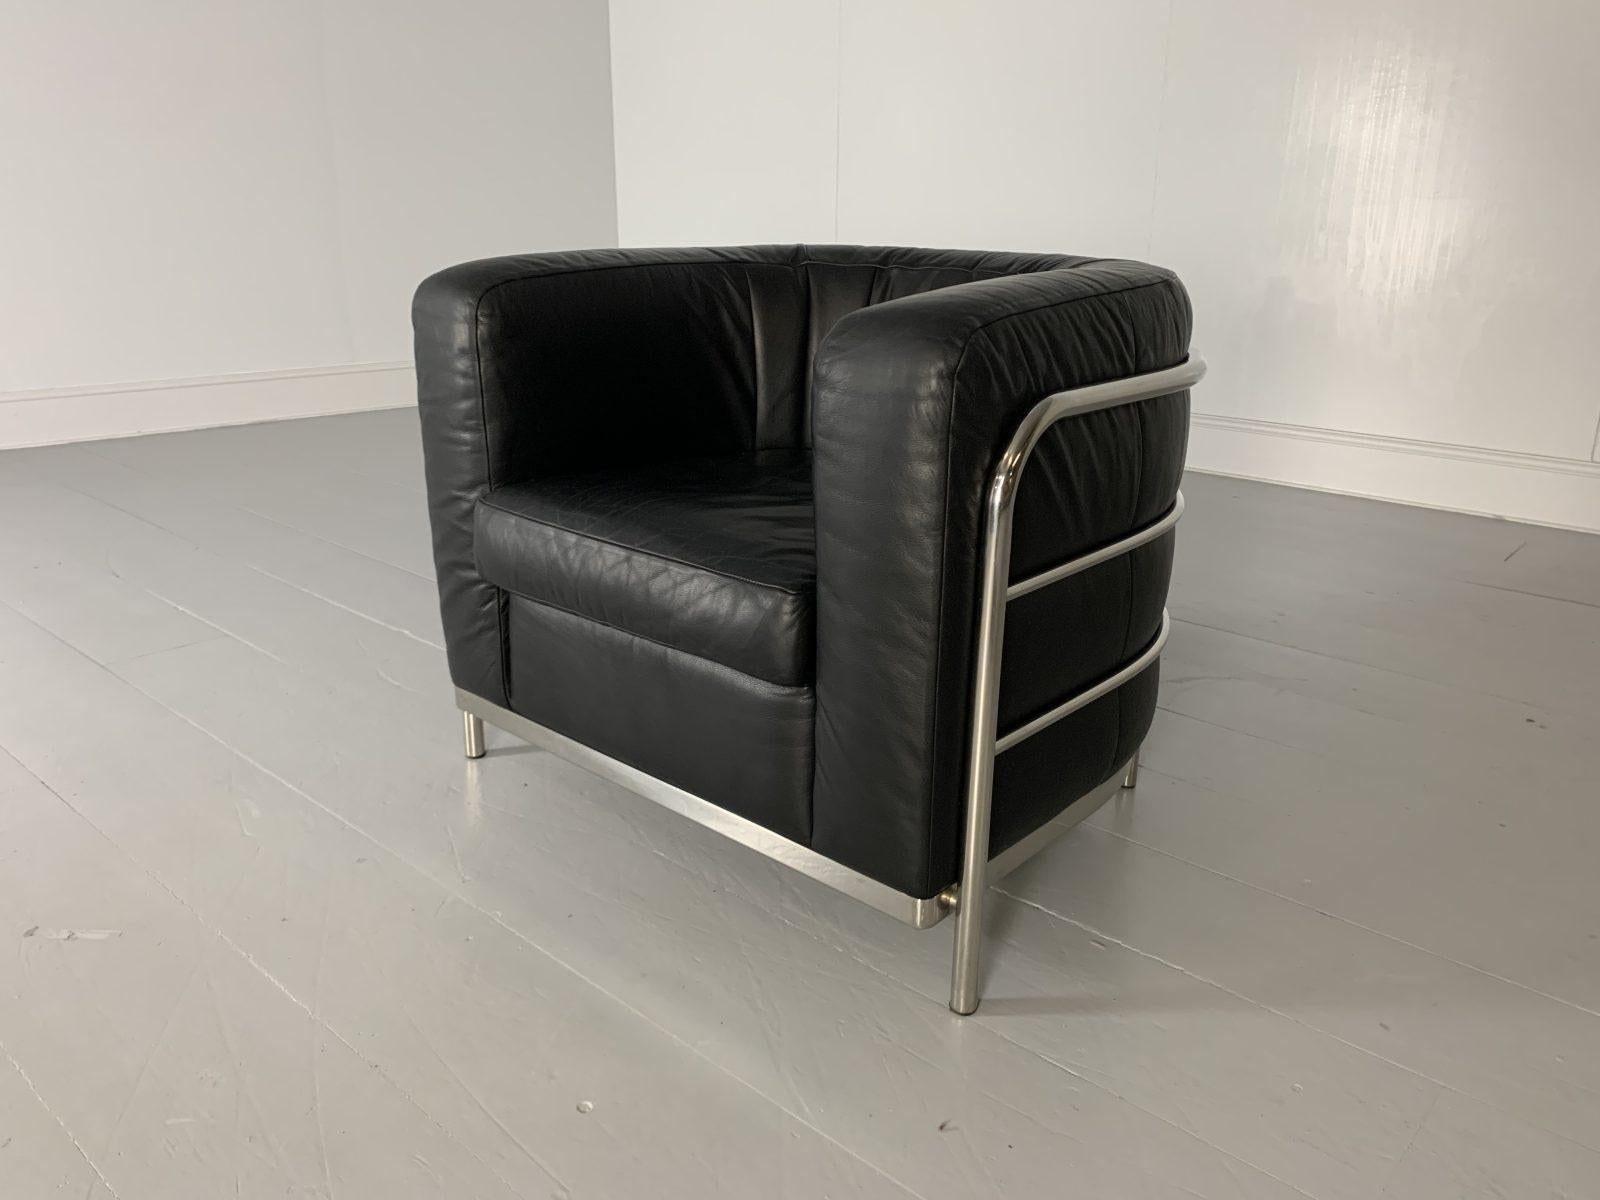 Zanotta “Onda” Armchair, in Black “Scozia” Leather and Chrome 1